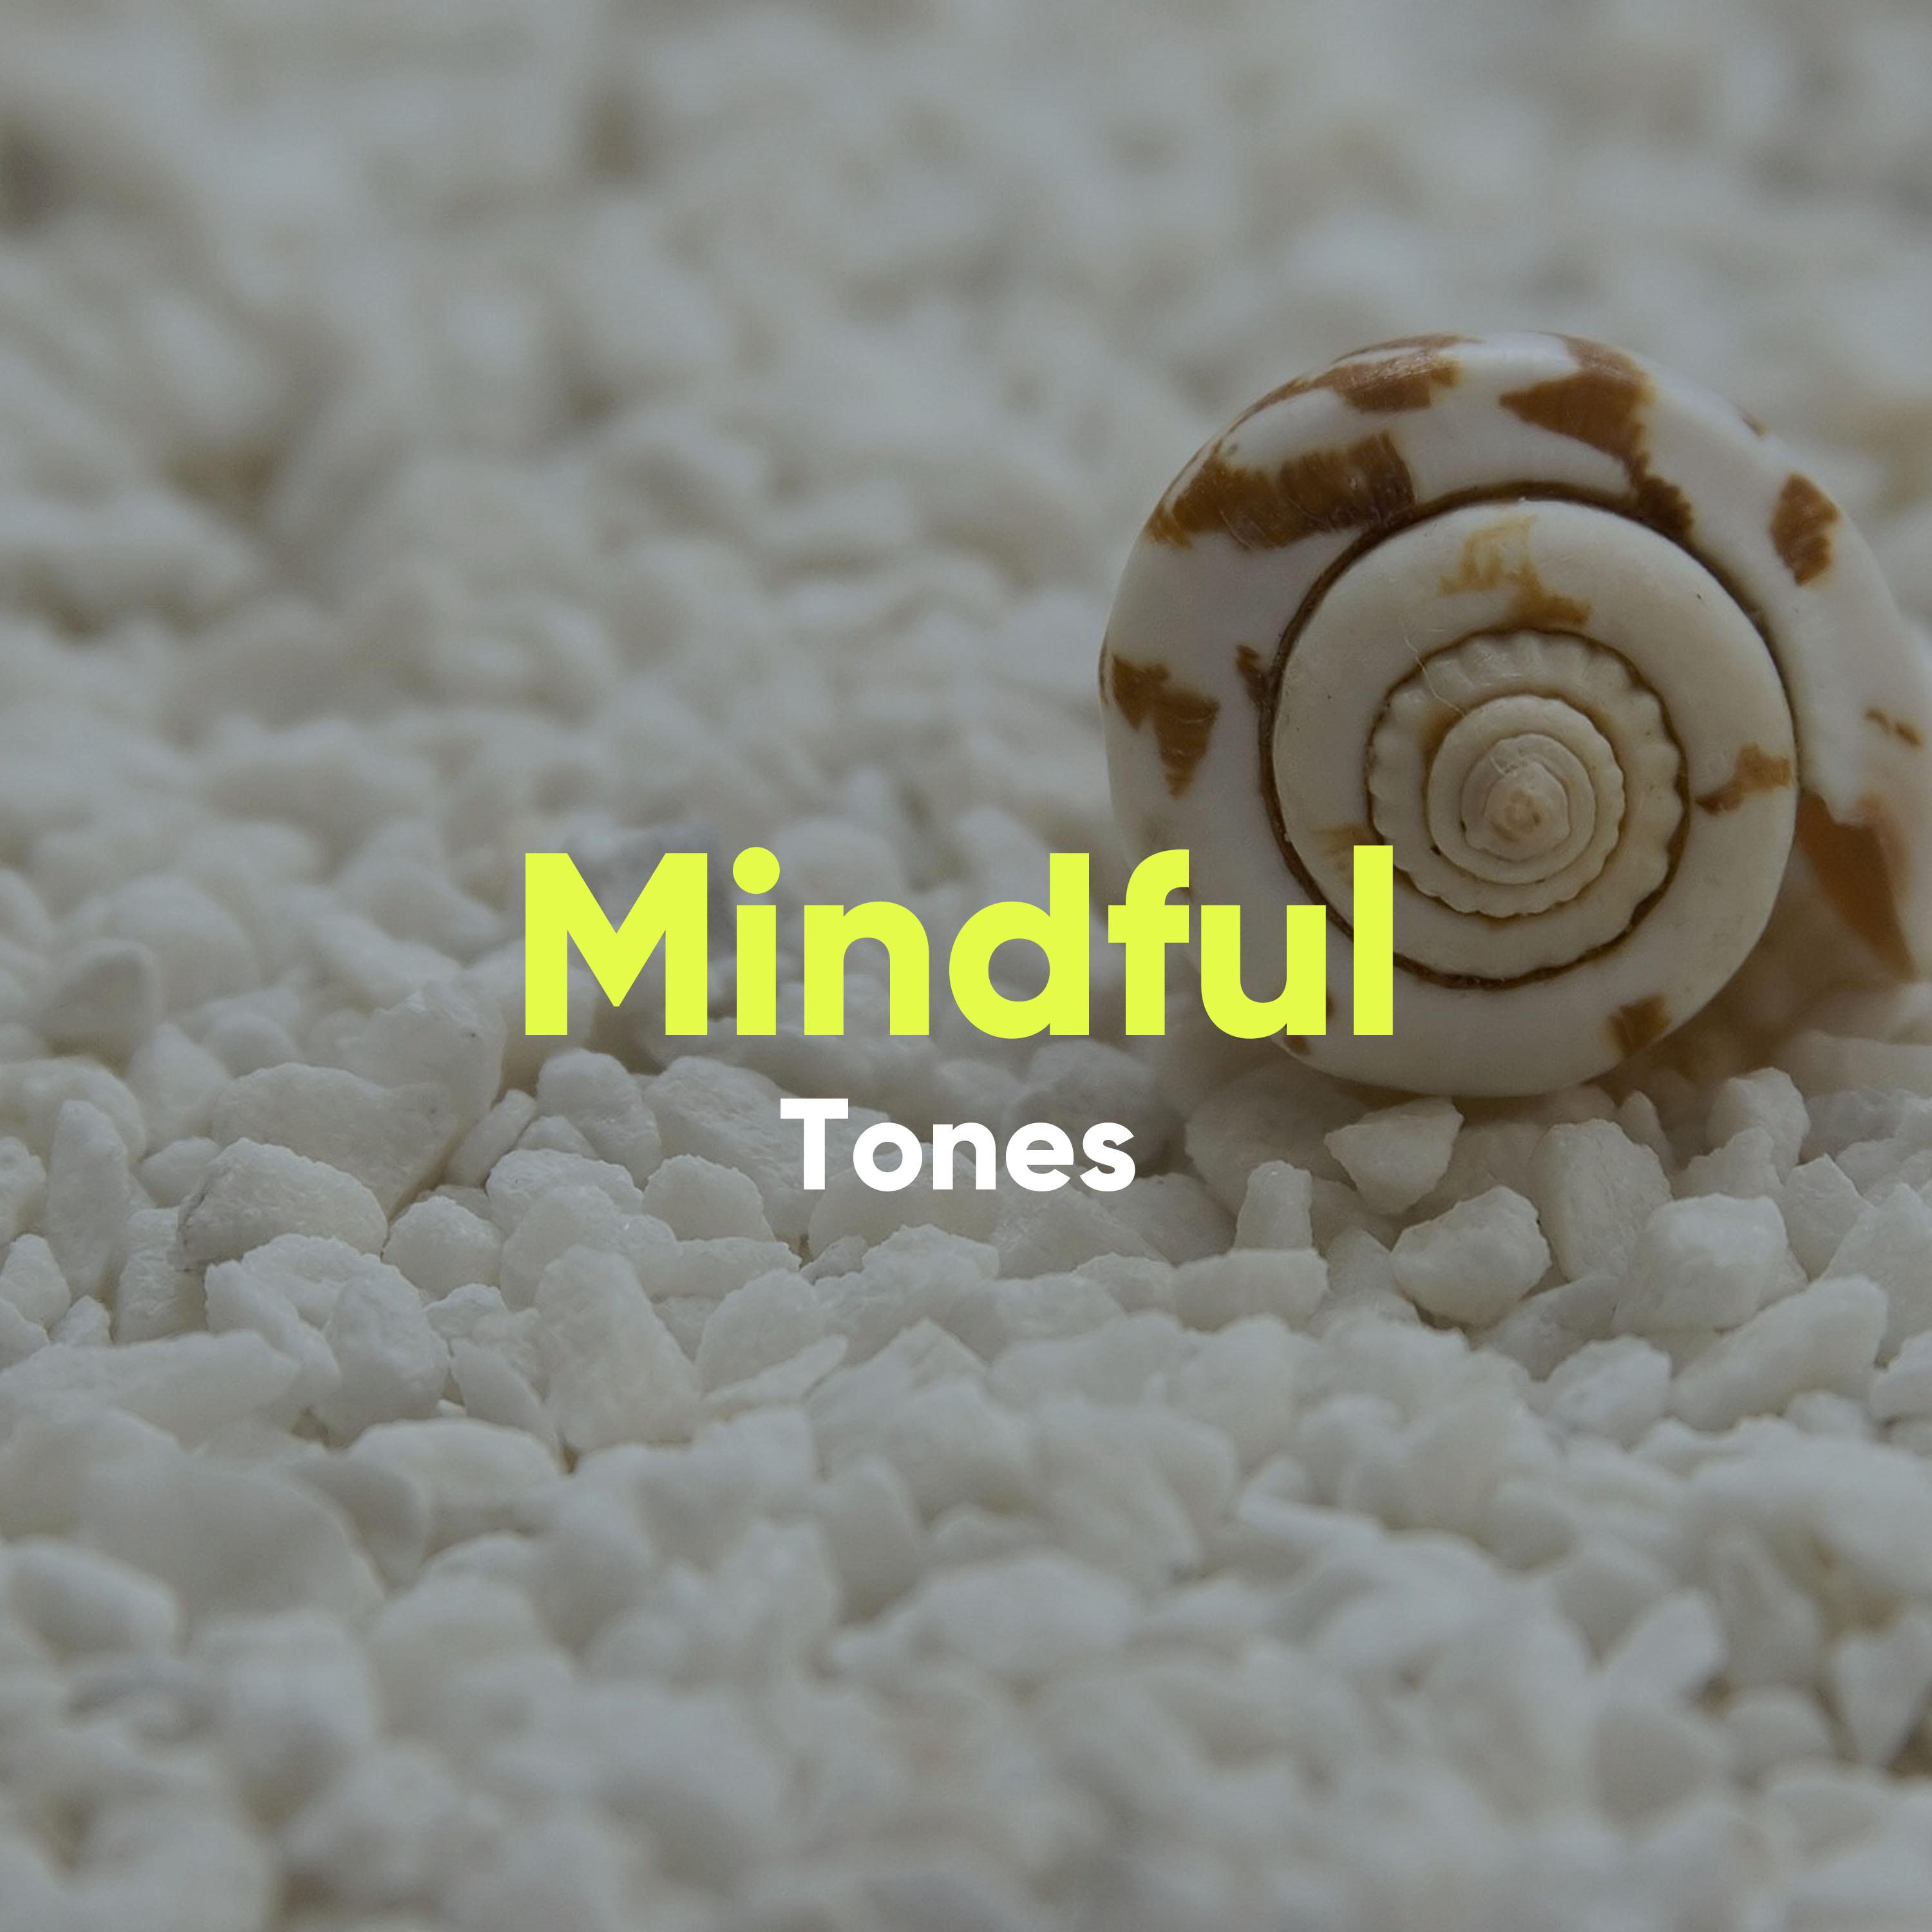 Mindful Tones